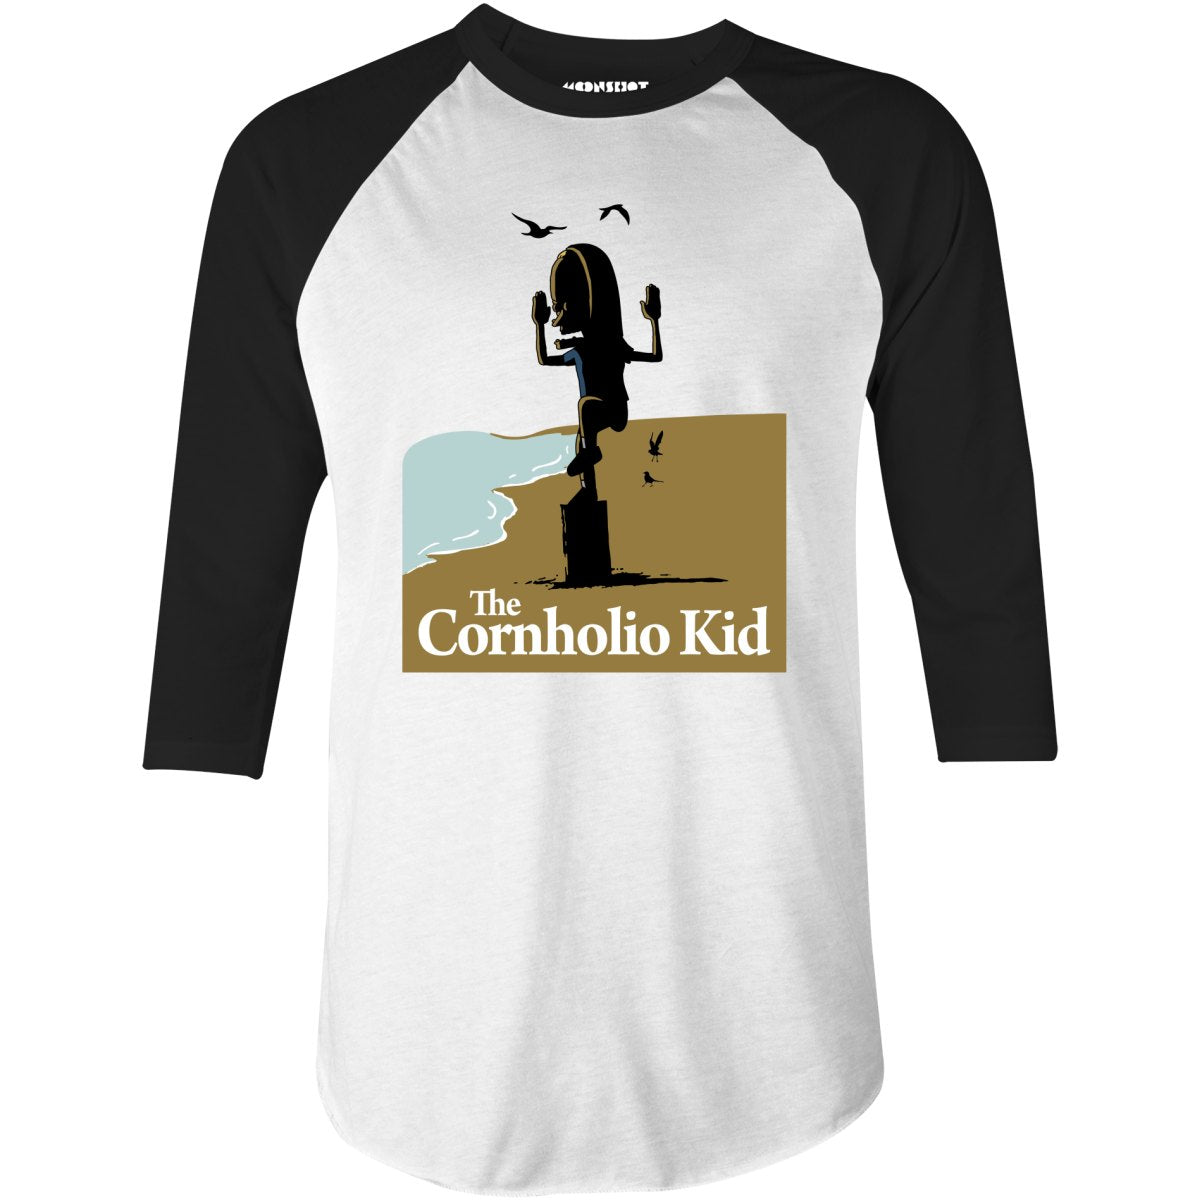 The Cornholio Kid - 3/4 Sleeve Raglan T-Shirt